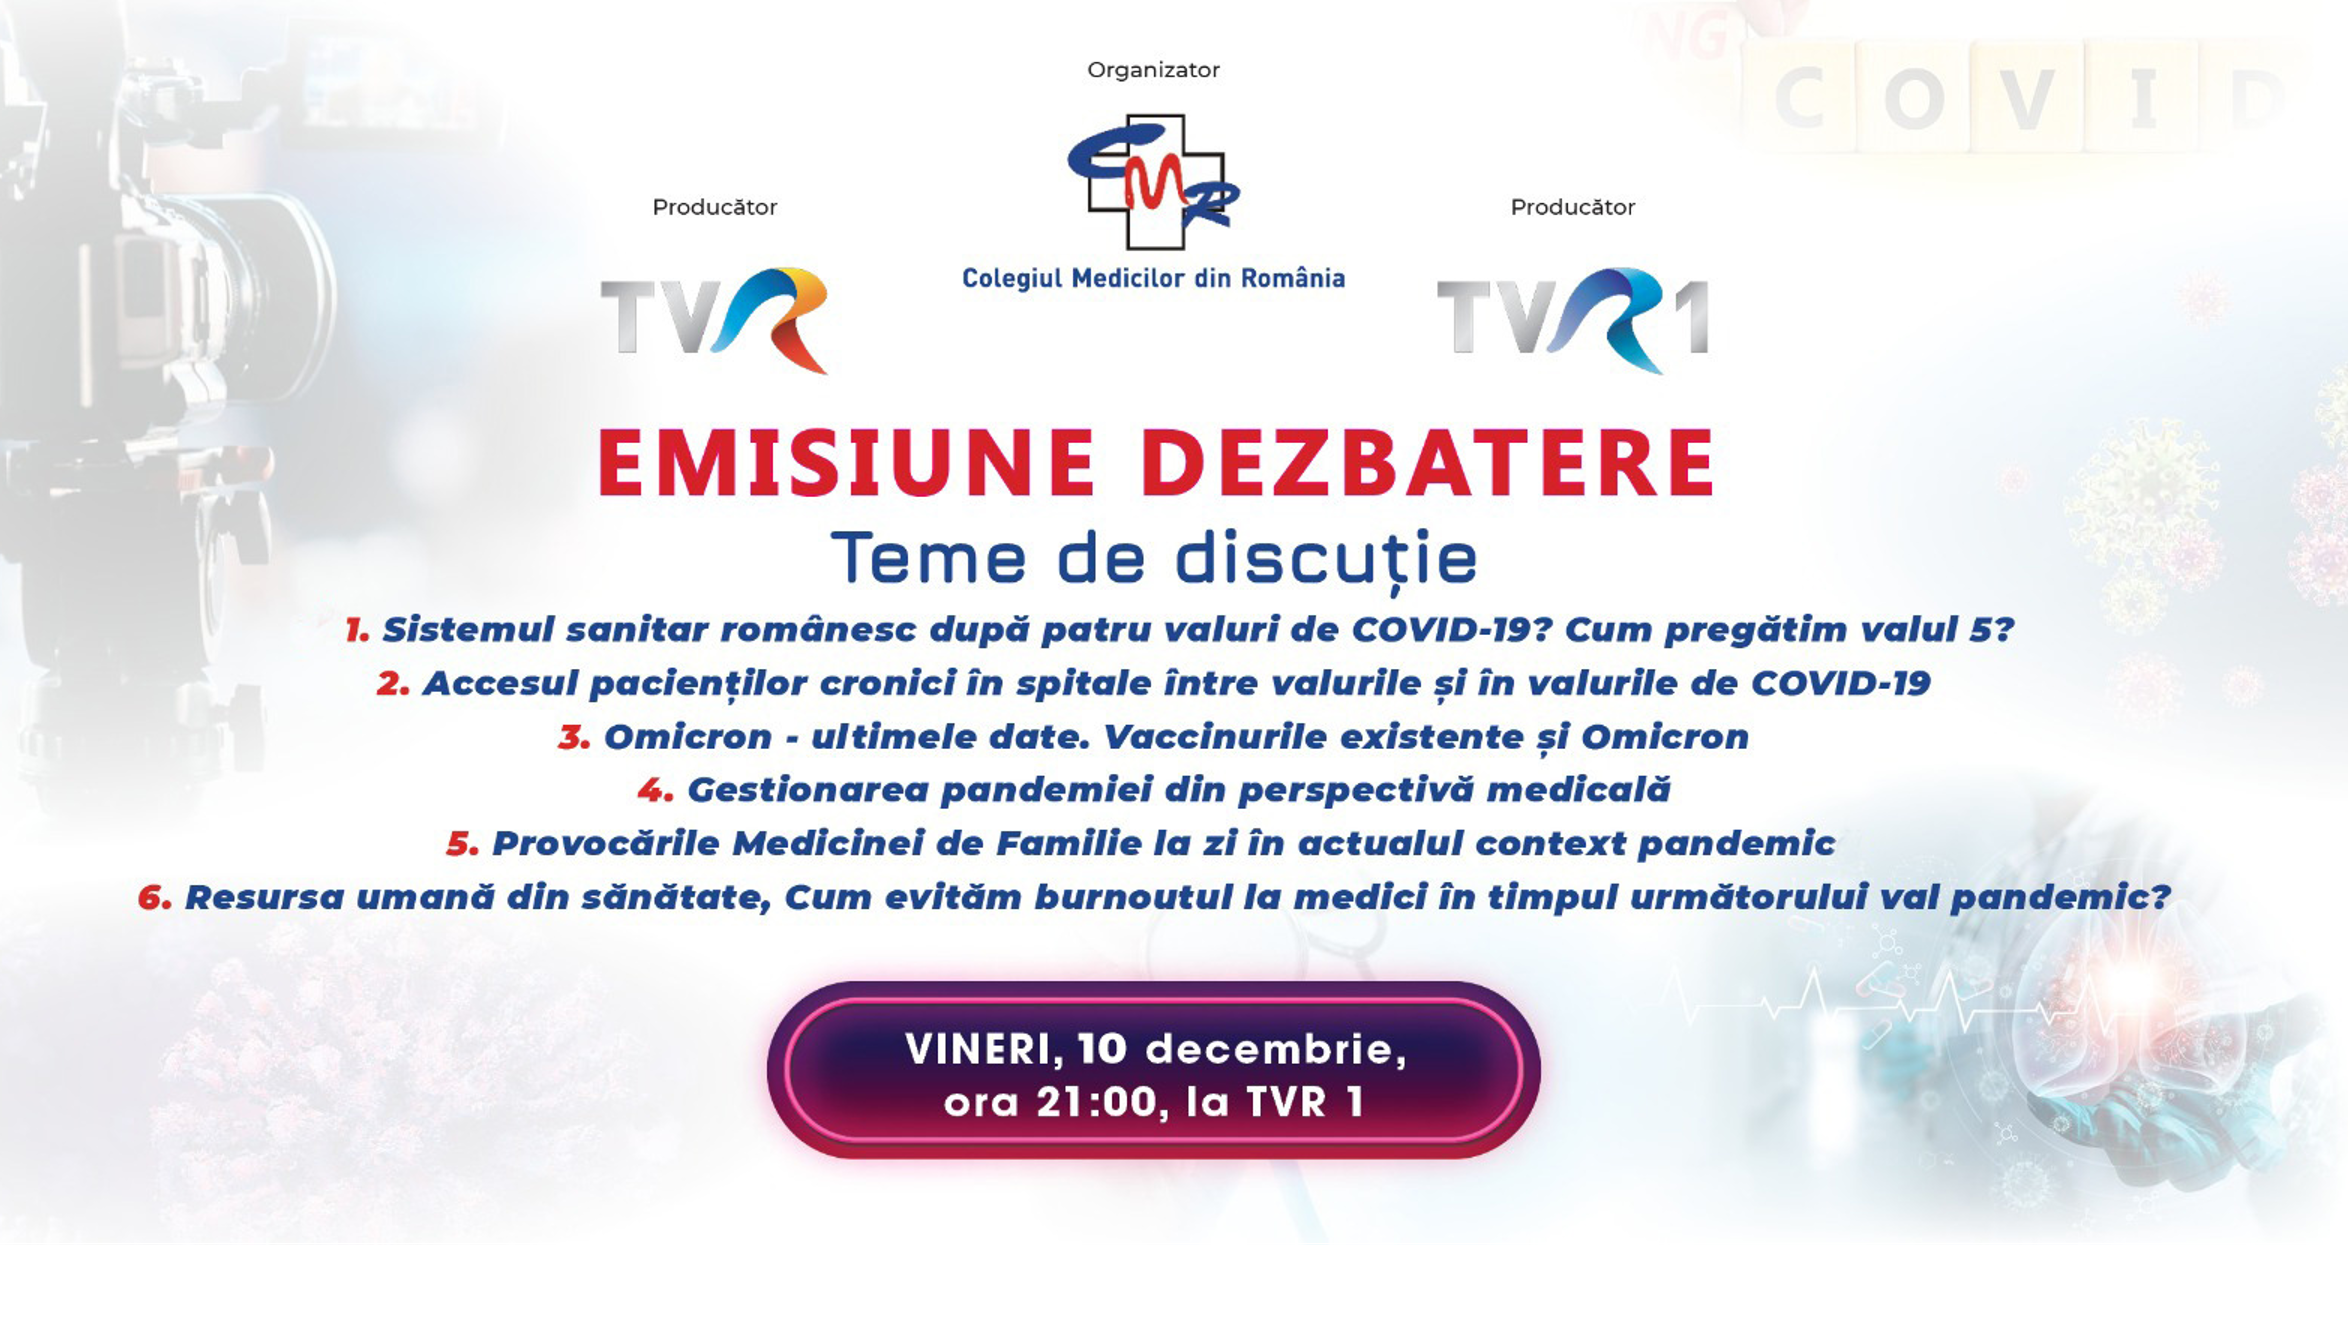 Emisiune dezbatere vineri de la ora 21.00 la TVR